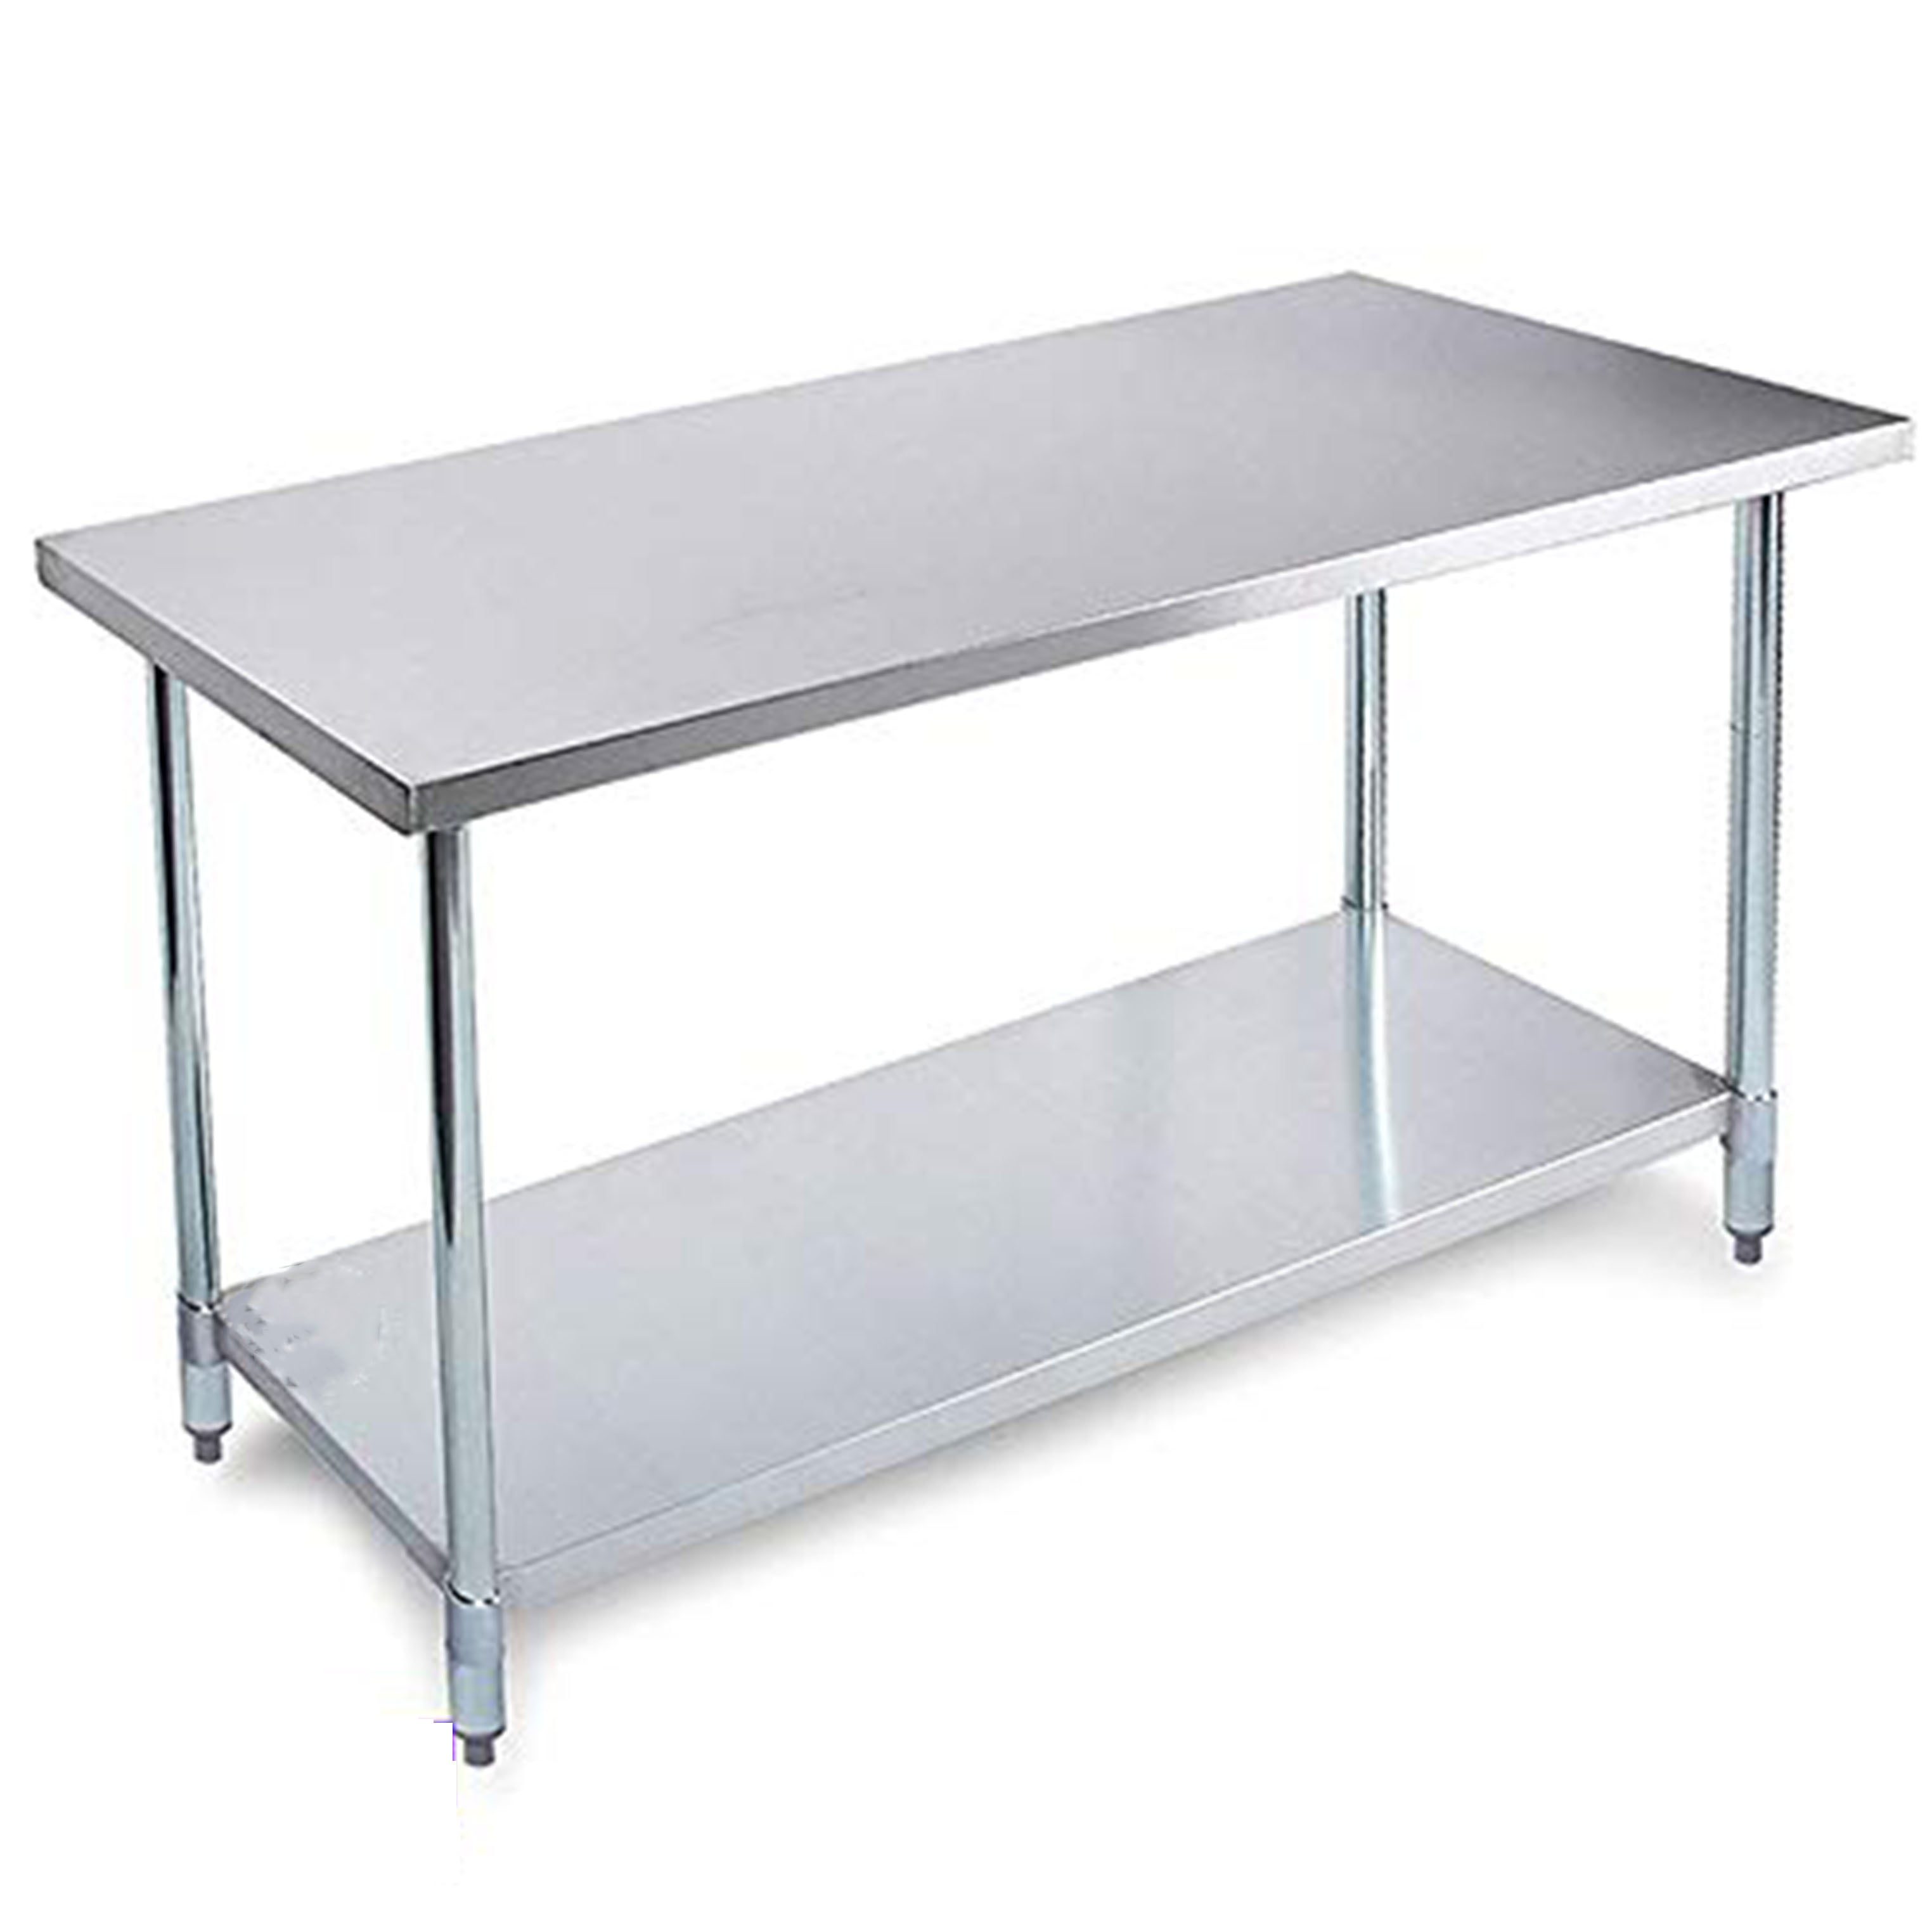 30" x 60" Stainless Steel Work Prep Shelf Table Commercial Restaurant Stainless Steel Commercial Work Table